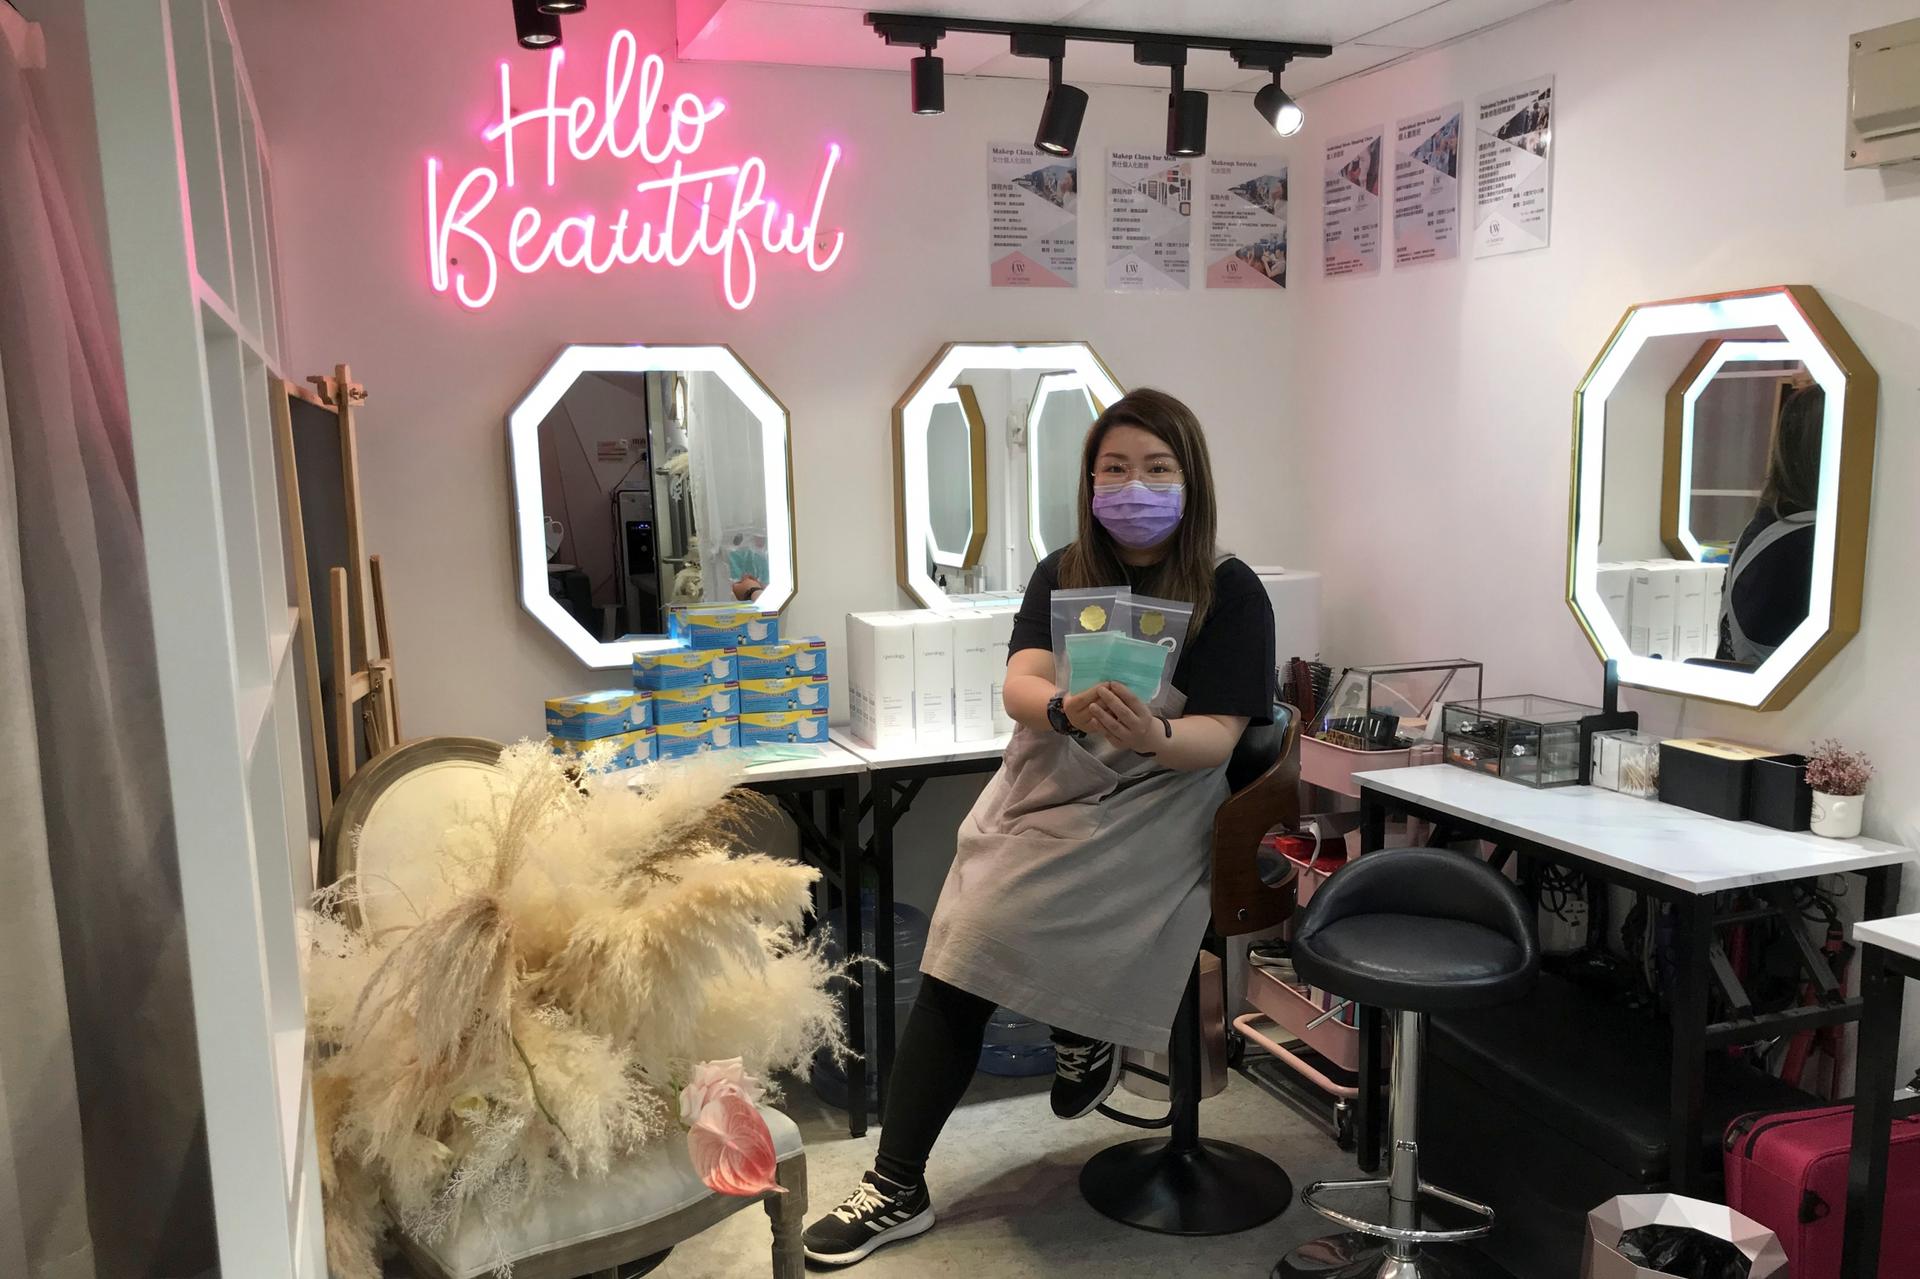 A woman sits in a beauty salon